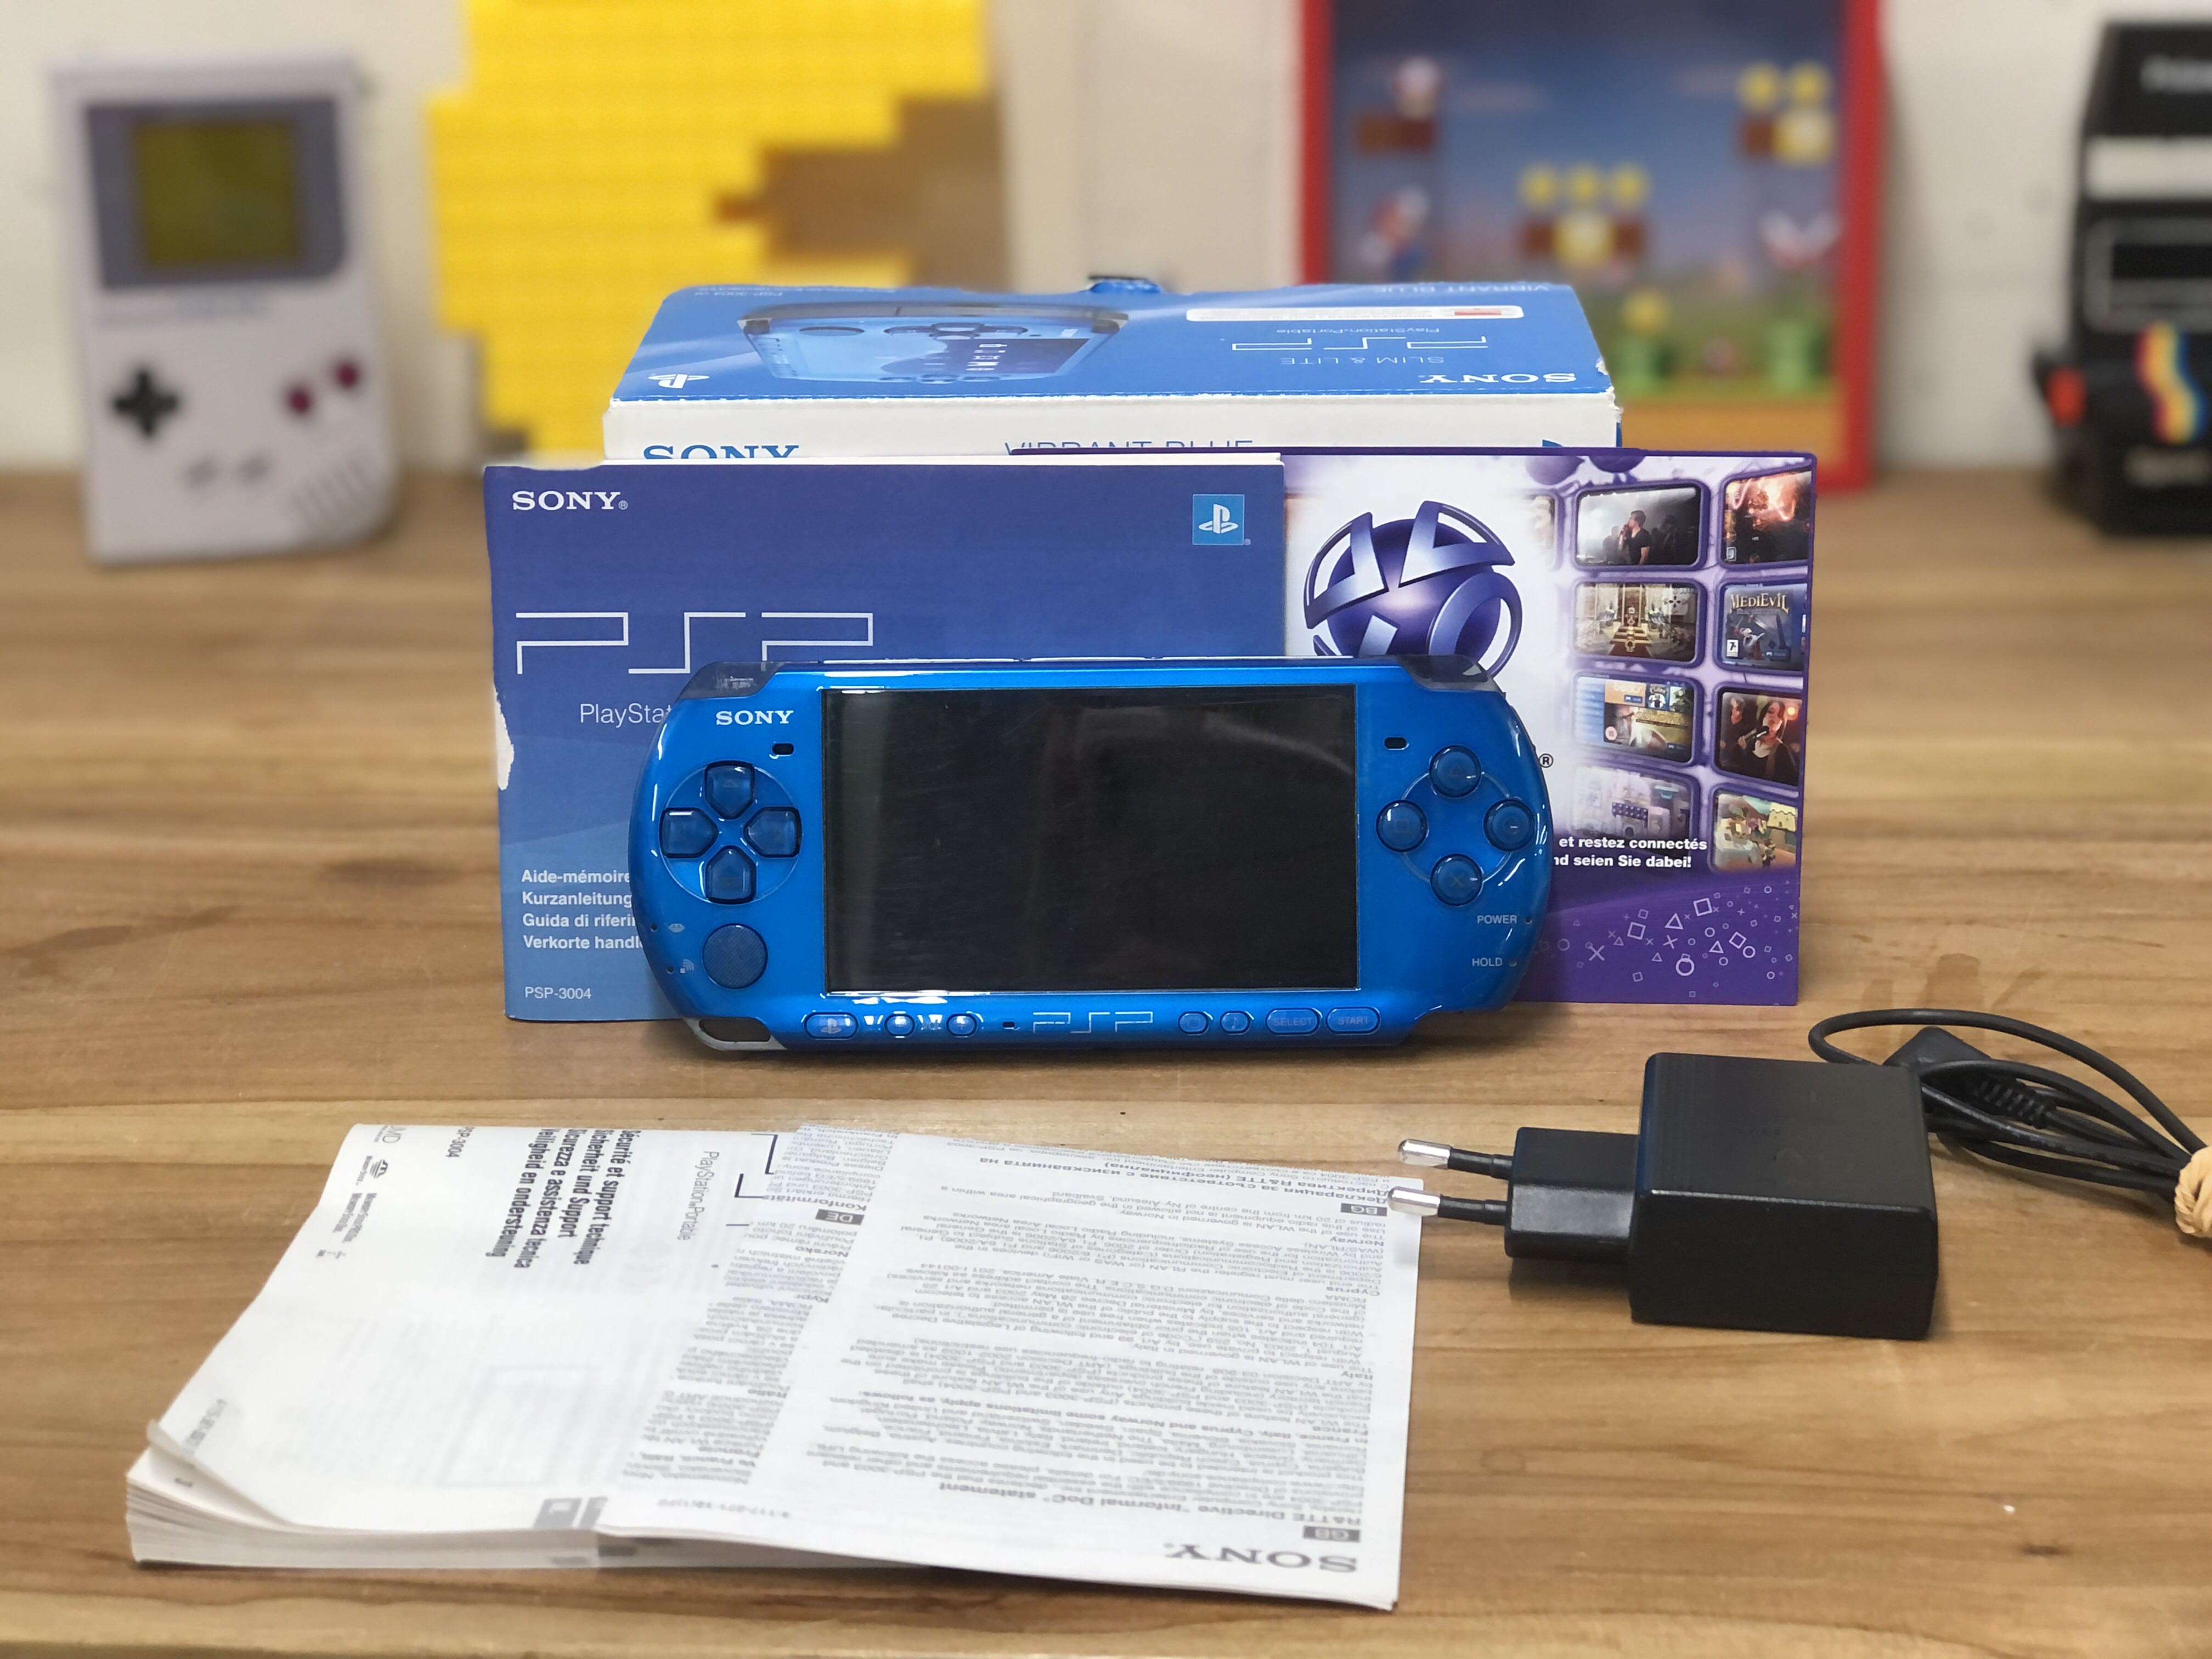 Playstation Portable Slim & Lite PSP 3000 - Vibrant Blue [Complete] - Playstation Portable Hardware